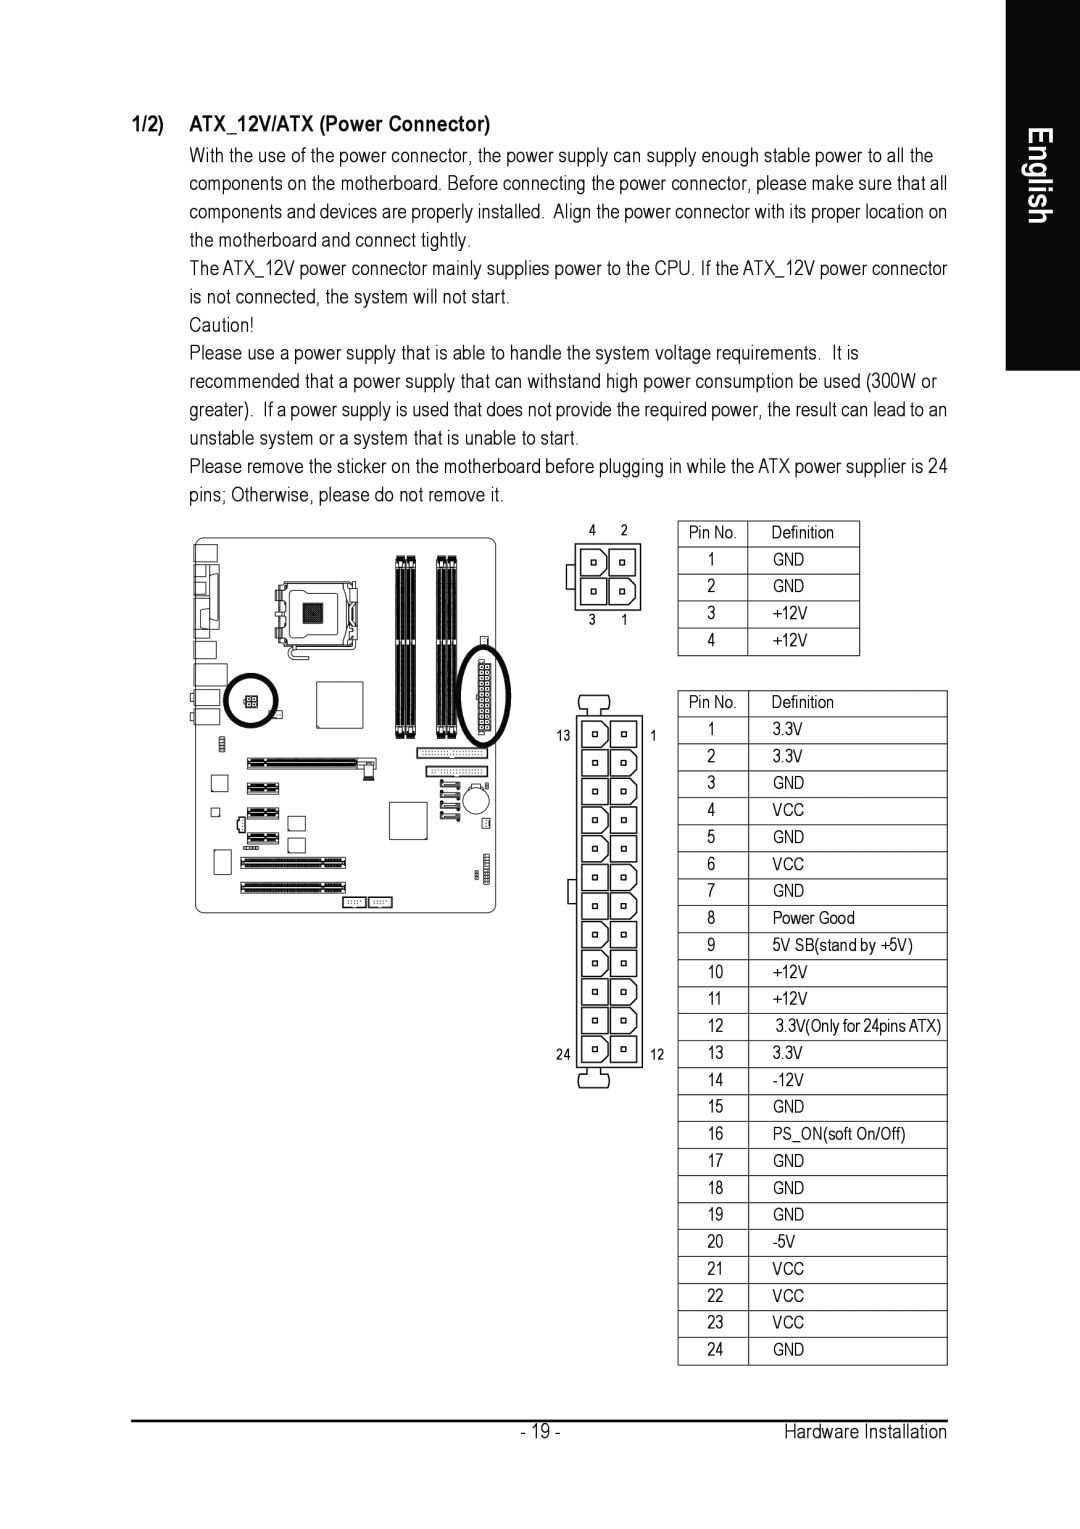 Gigabyte GA-8I925X-G user manual 1/2 ATX12V/ATX Power Connector, English 